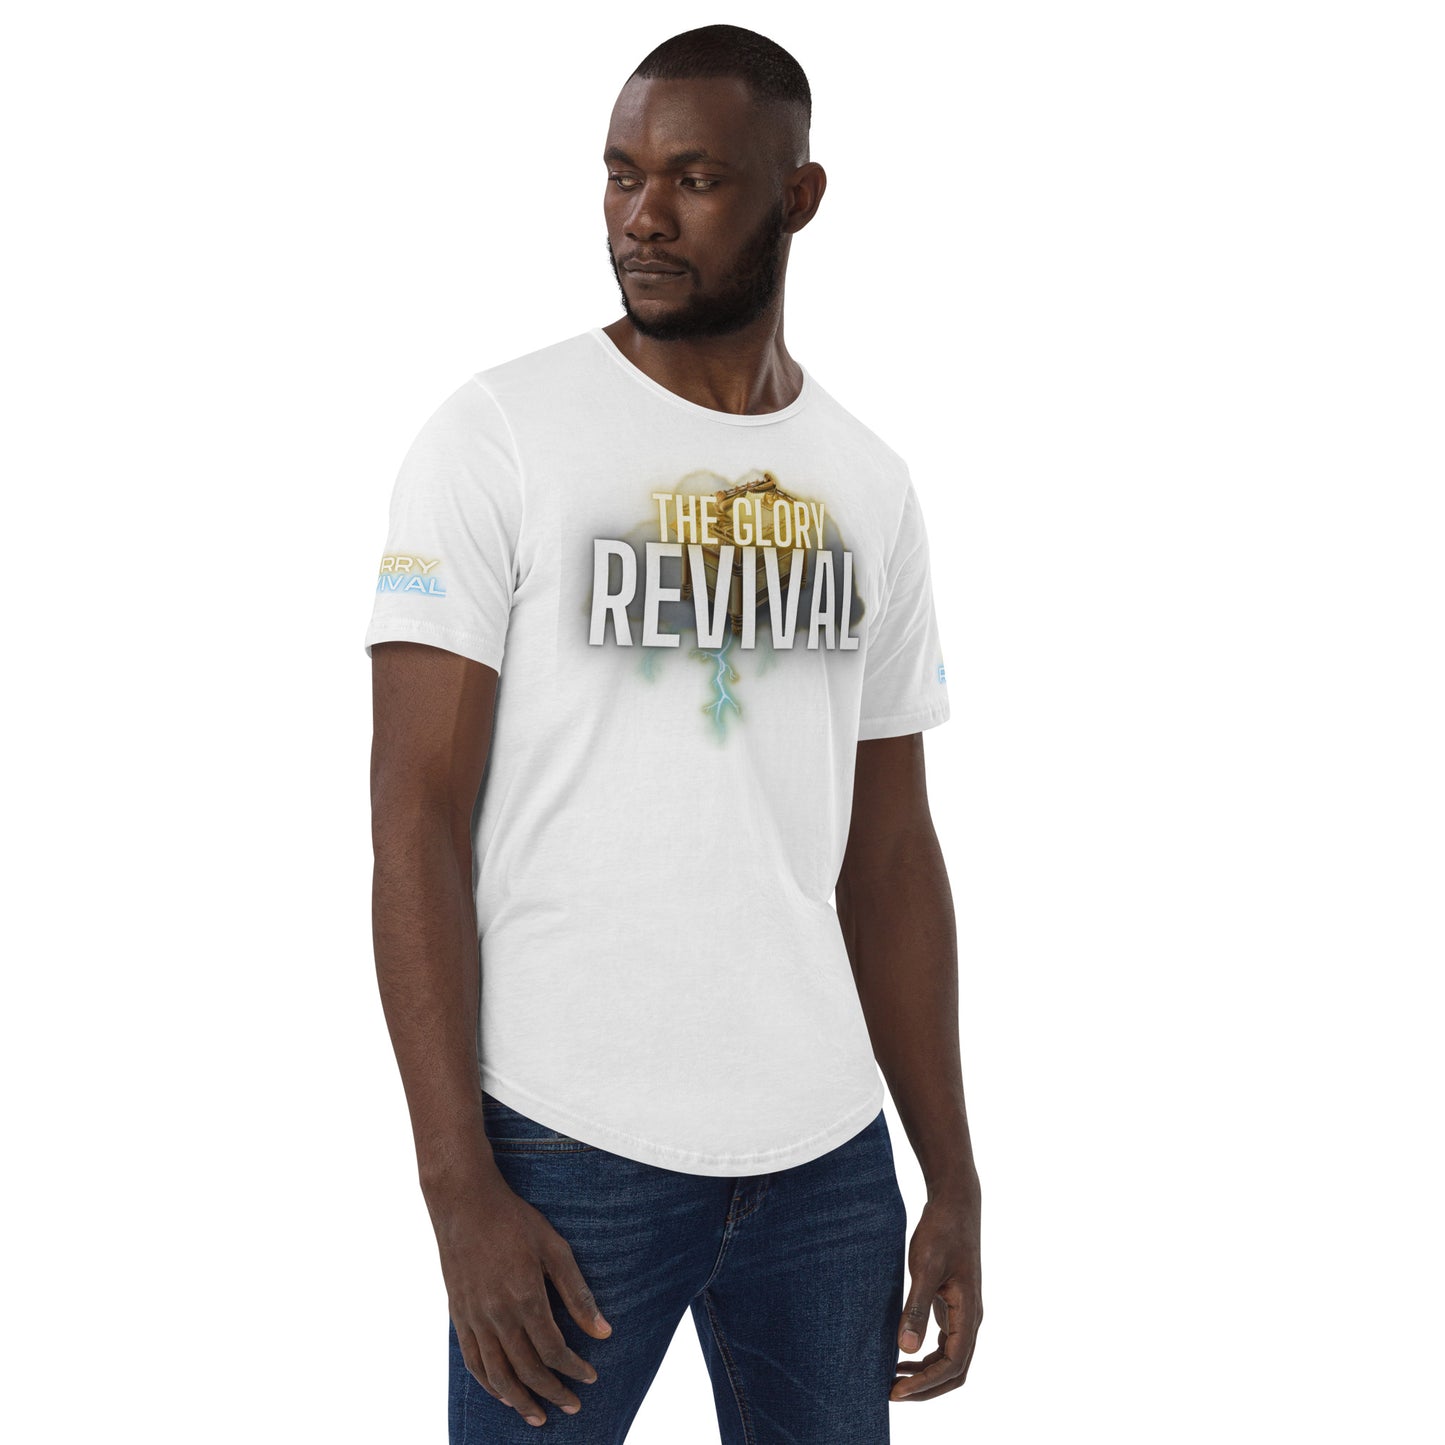 The Glory Revival T-Shirt (Premium Men's Shirt)